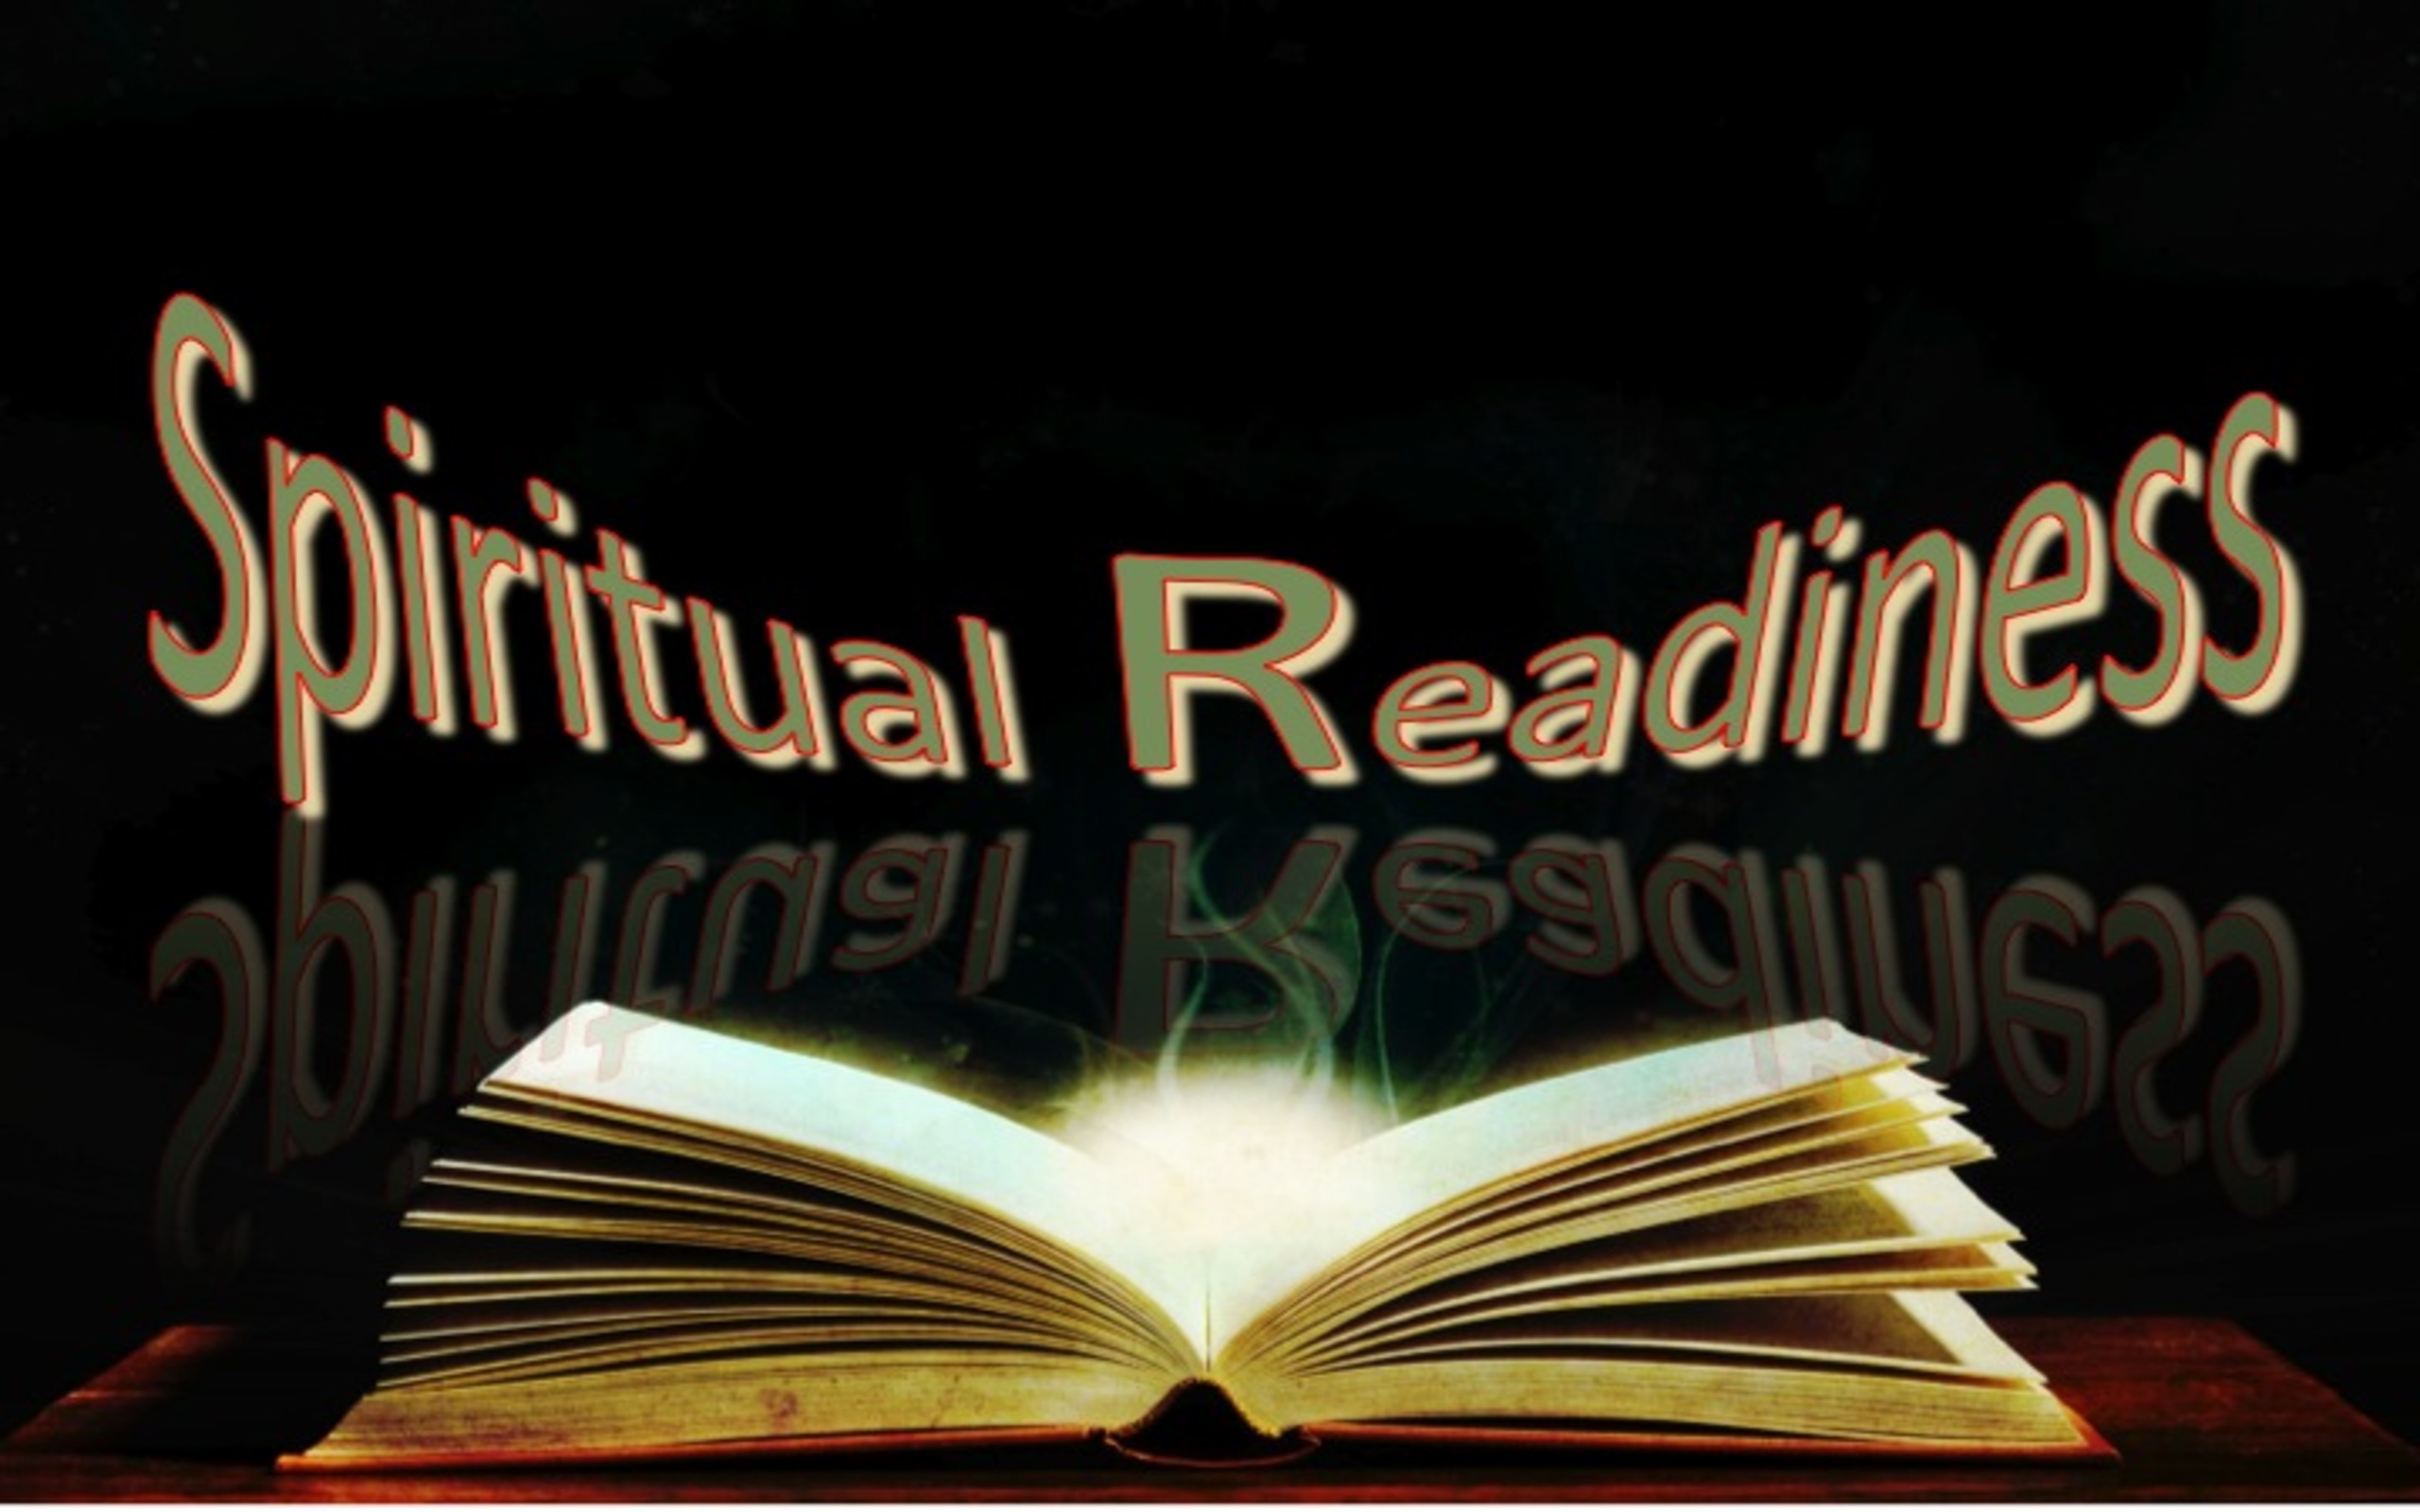 Spiritual Readiness (devotional) (black)